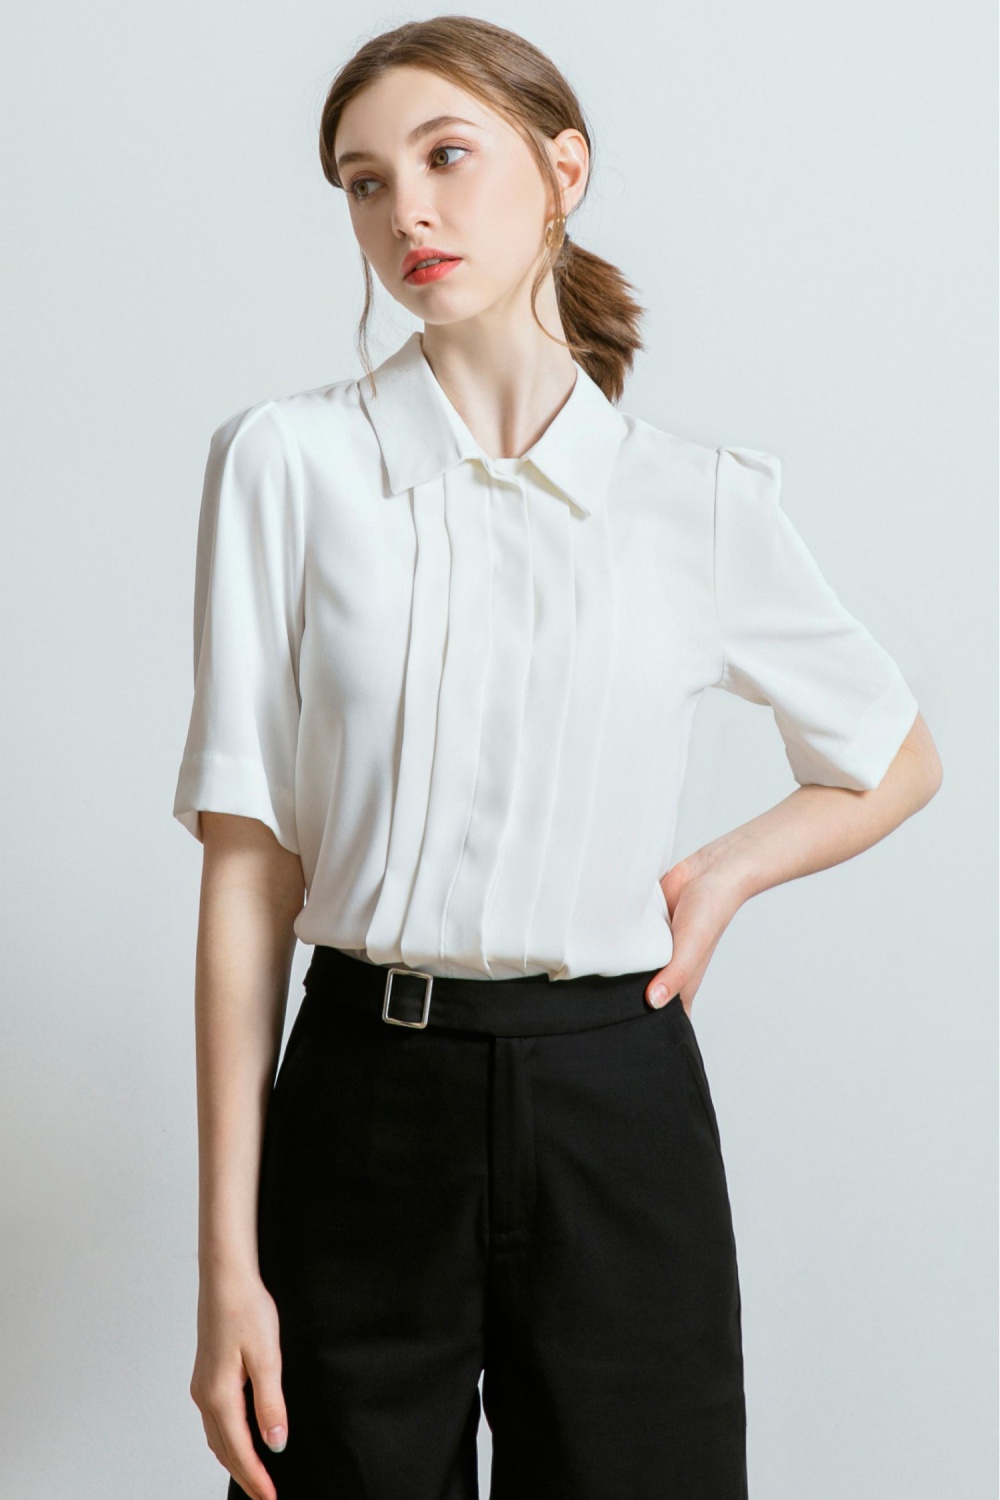 Profession short sleeve summer chiffon shirt for women